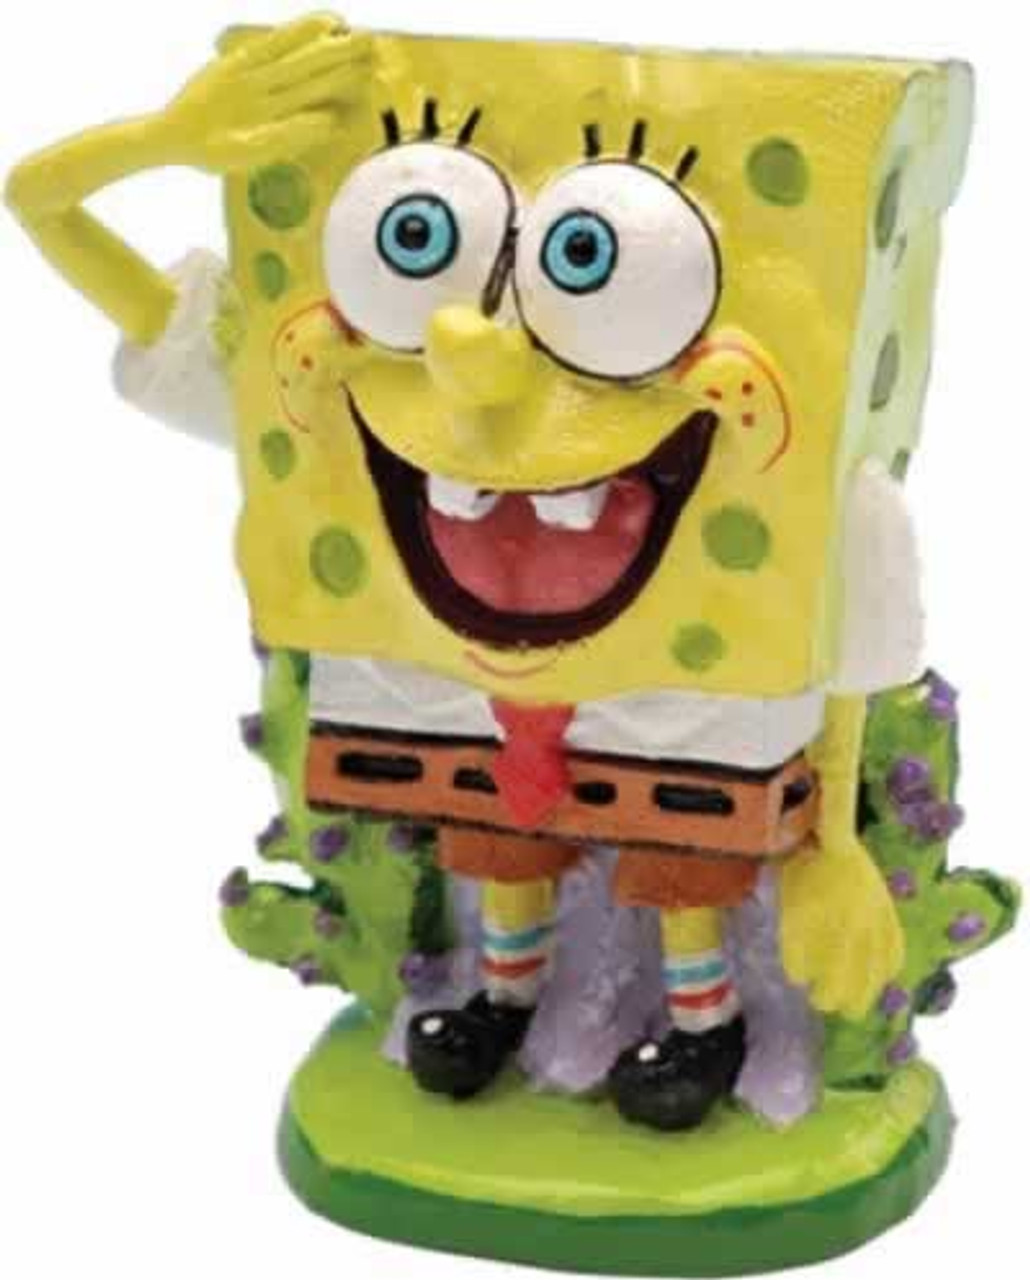 This SpongeBob Sponge Holder Belongs In every SpongeBob Lover's